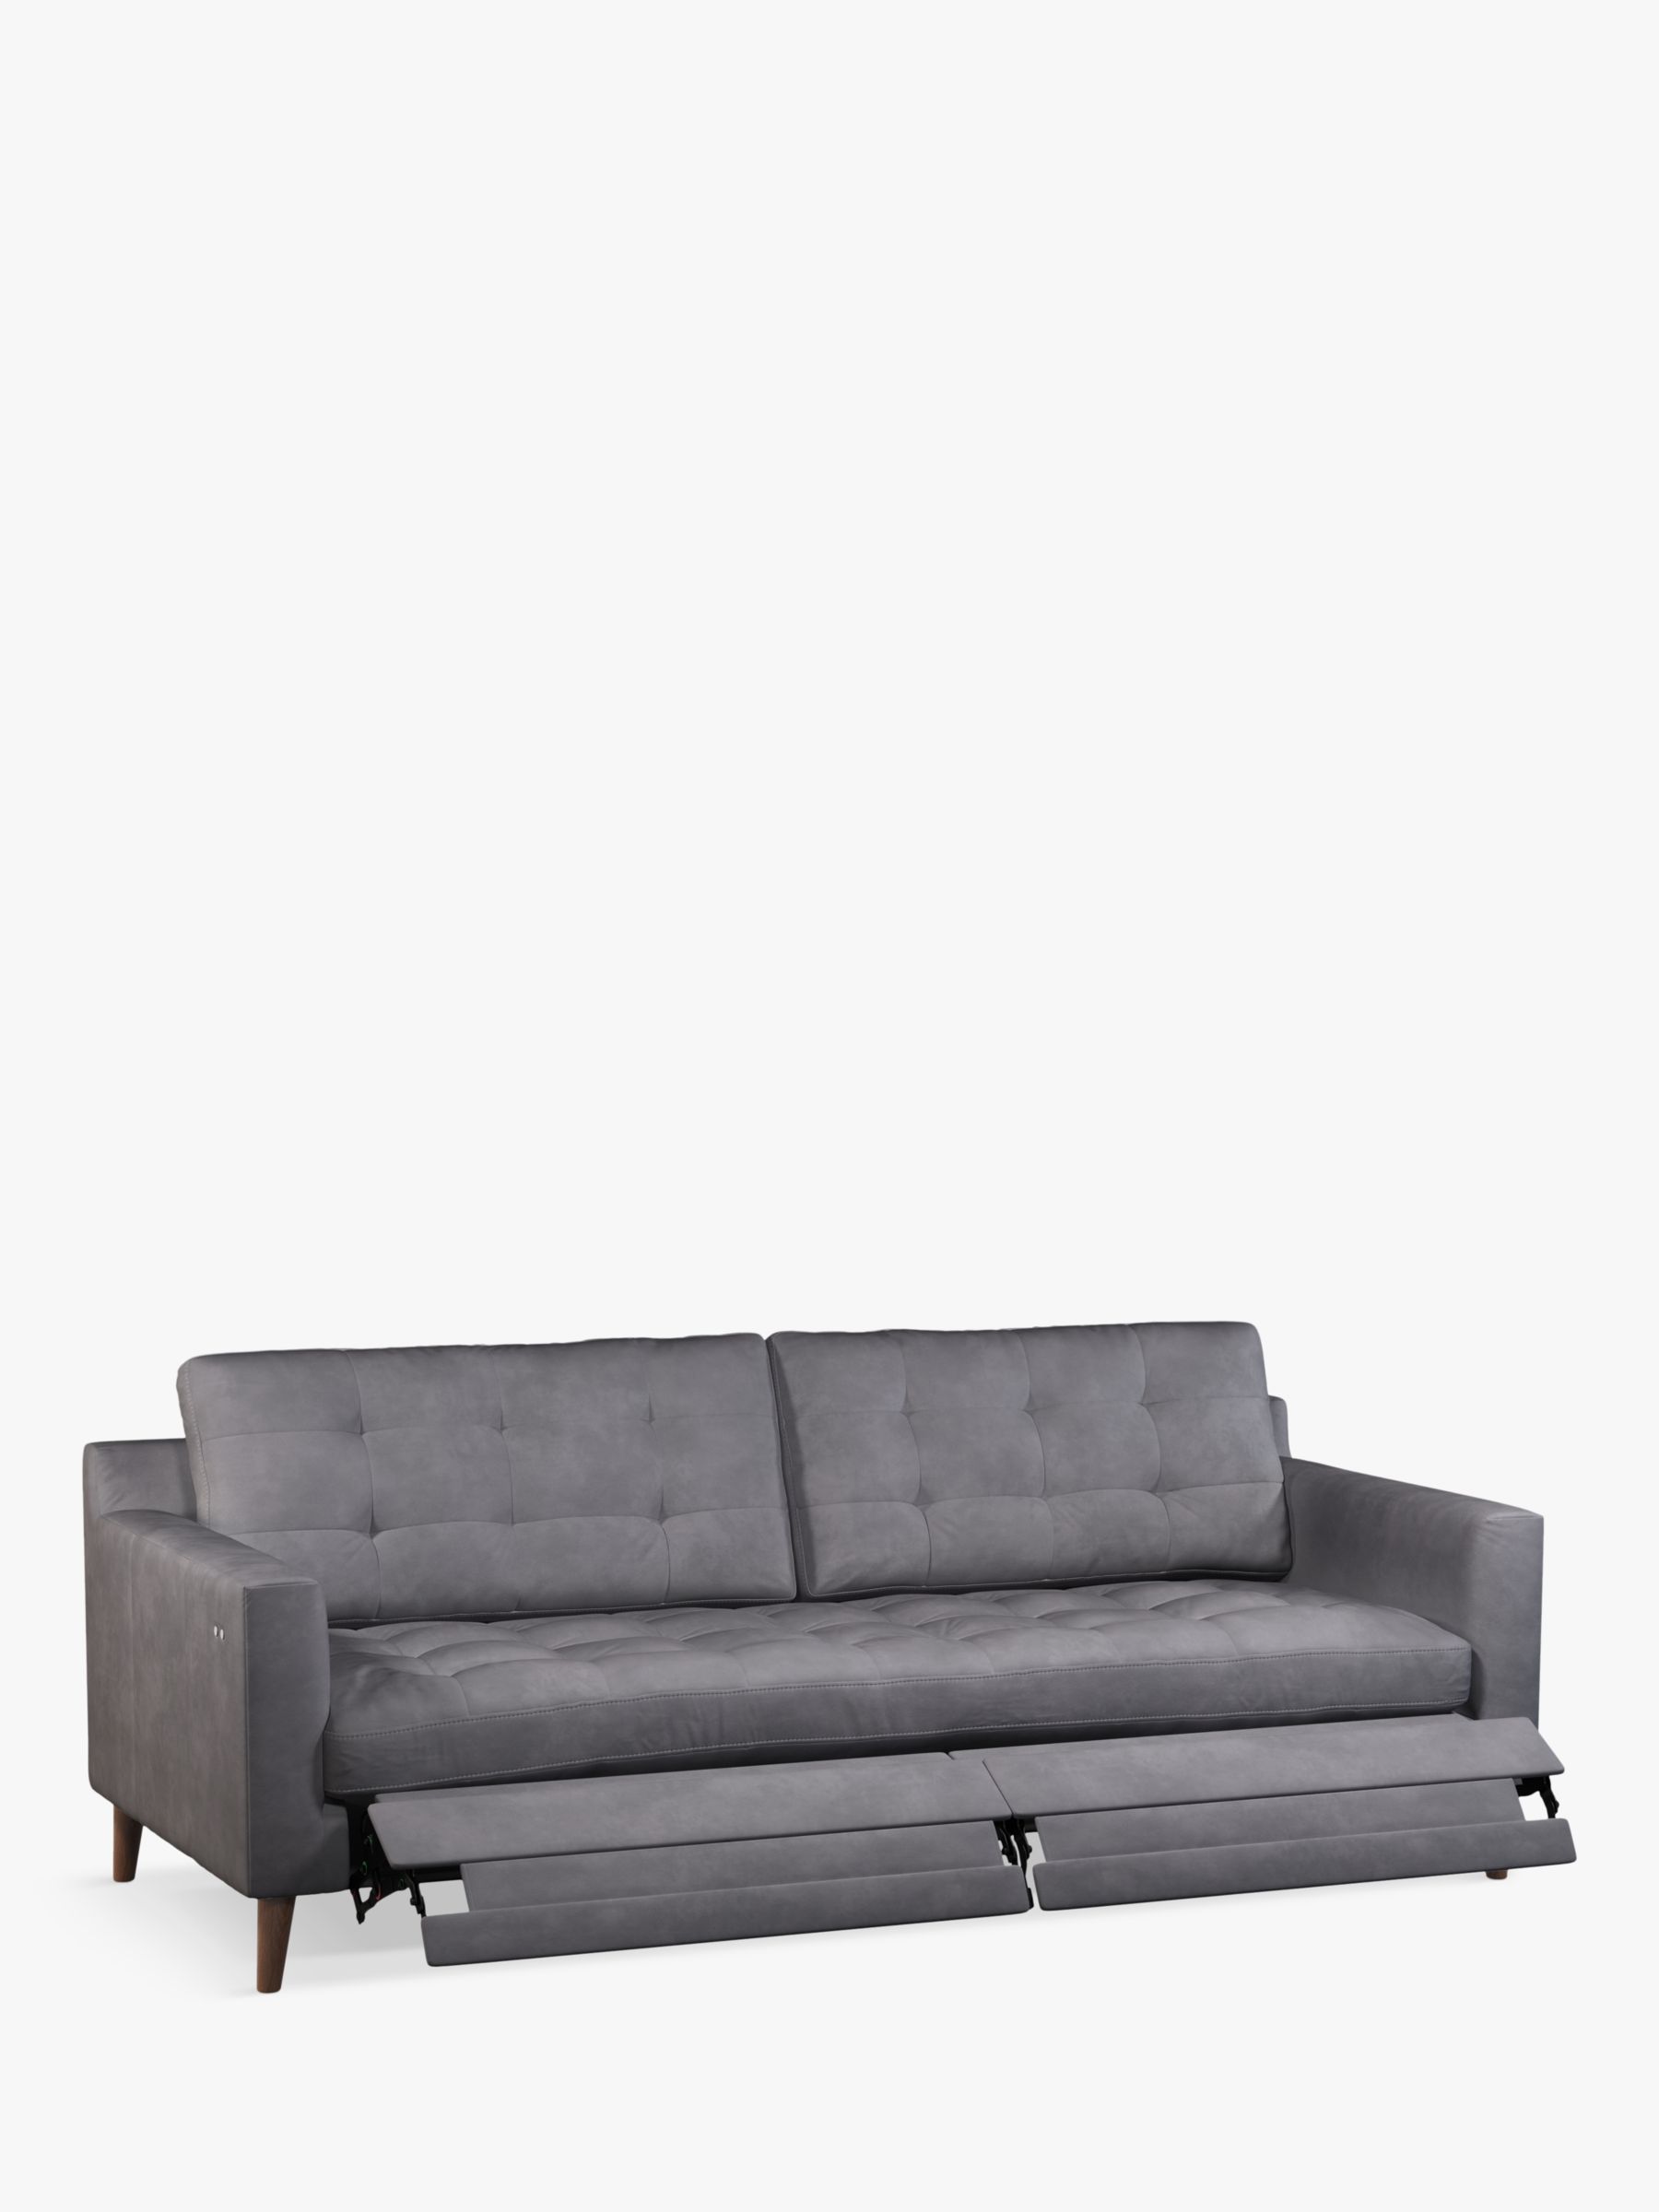 Draper Range, John Lewis Draper Motion Large 3 Seater Leather Sofa with Footrest Mechanism, Dark Leg, Soft Touch Grey